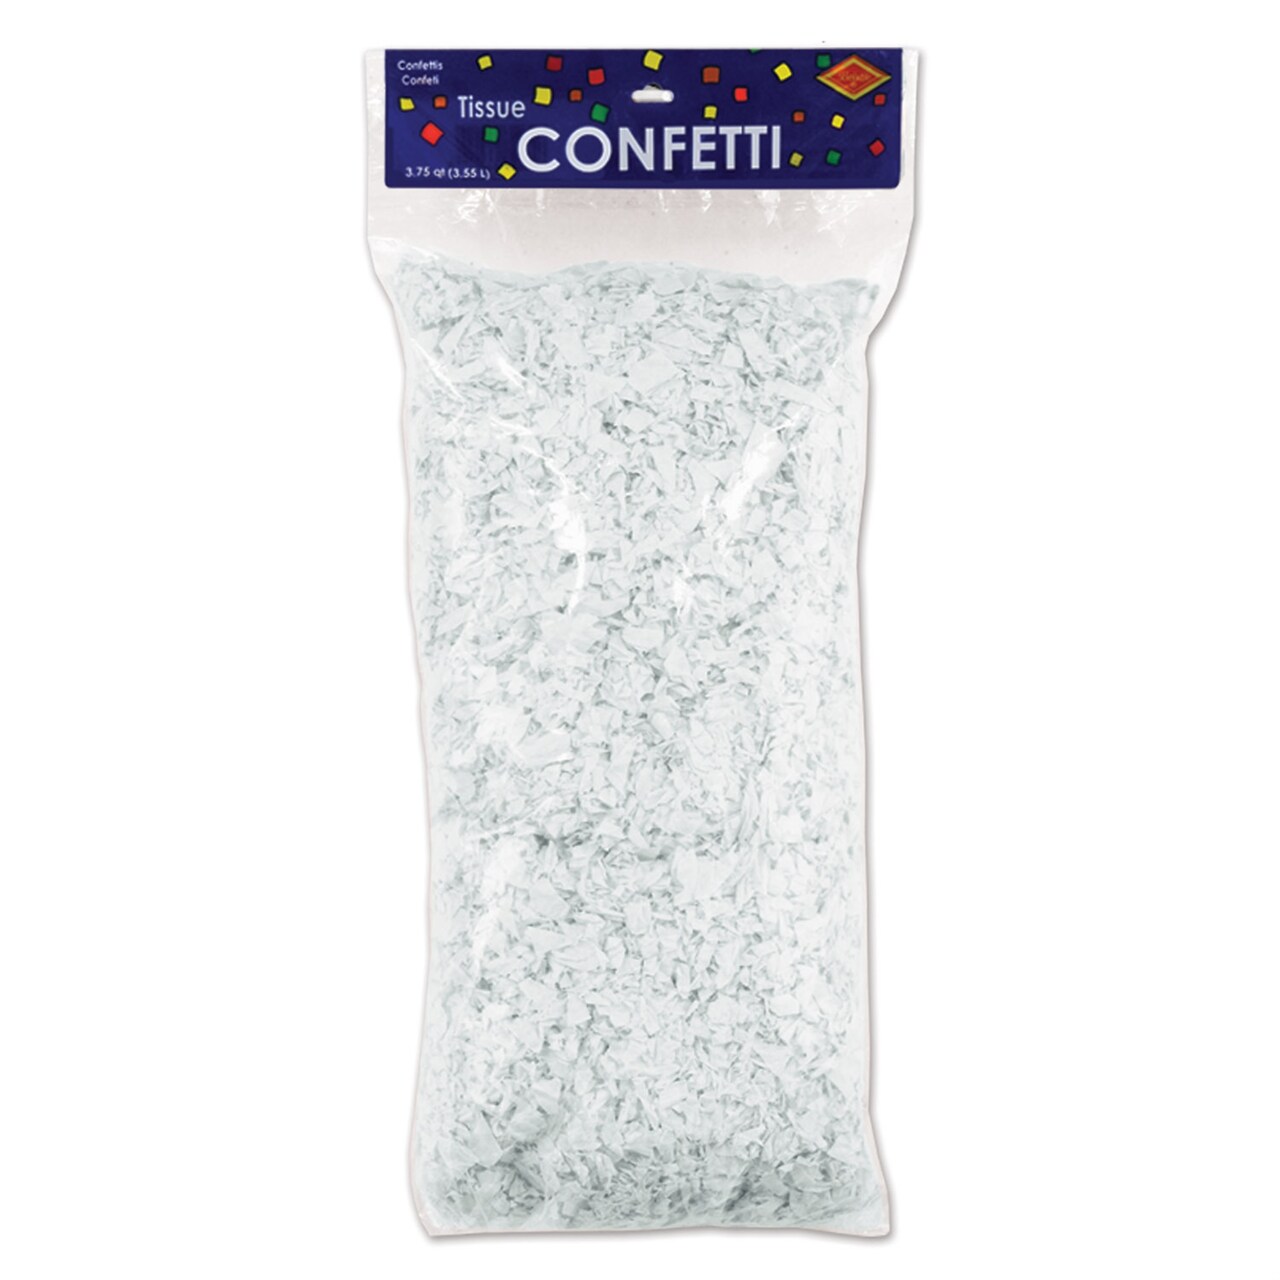 Tissue Confetti, (Pack of 6)